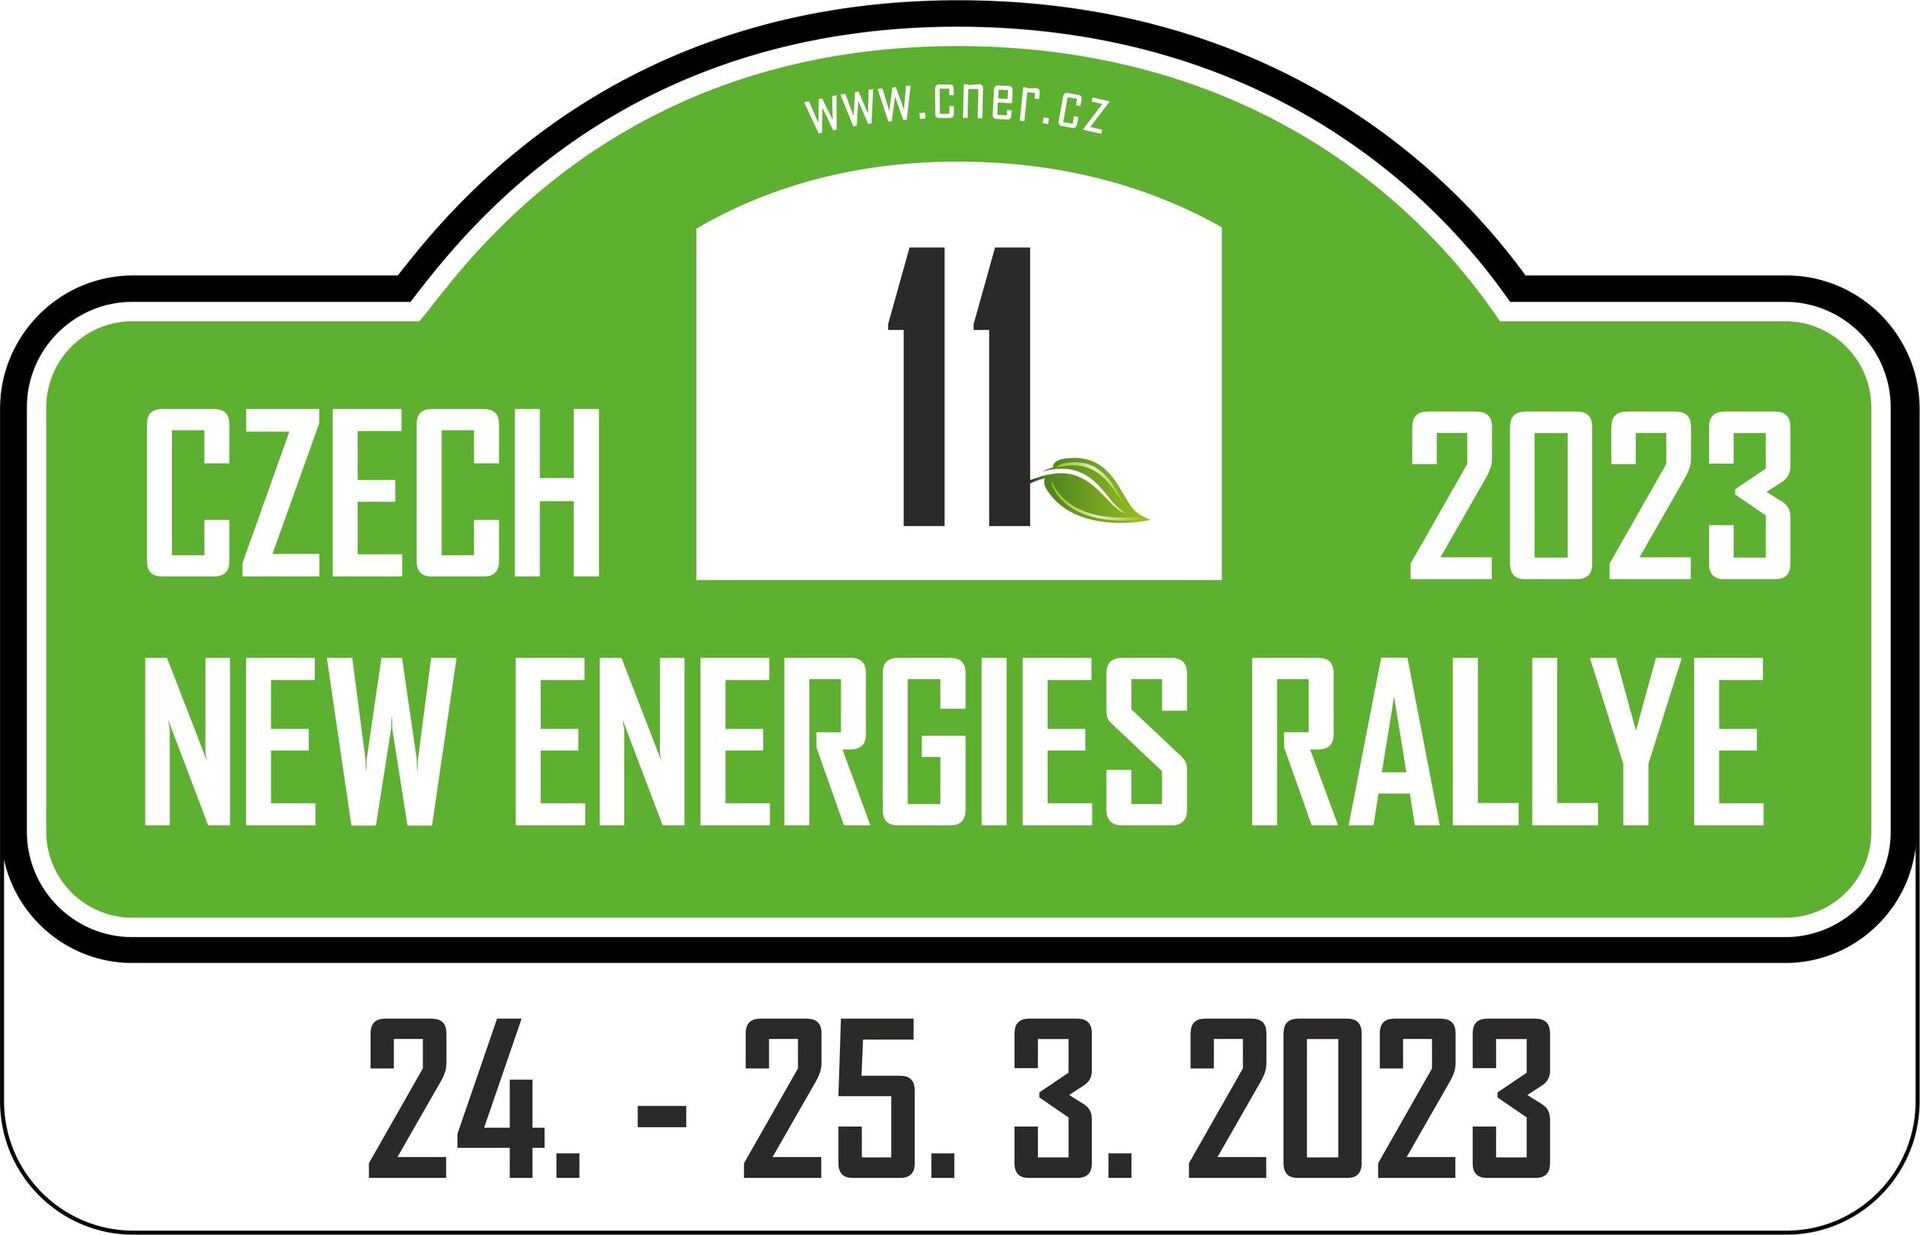 Czech New Energies Rallye 2023